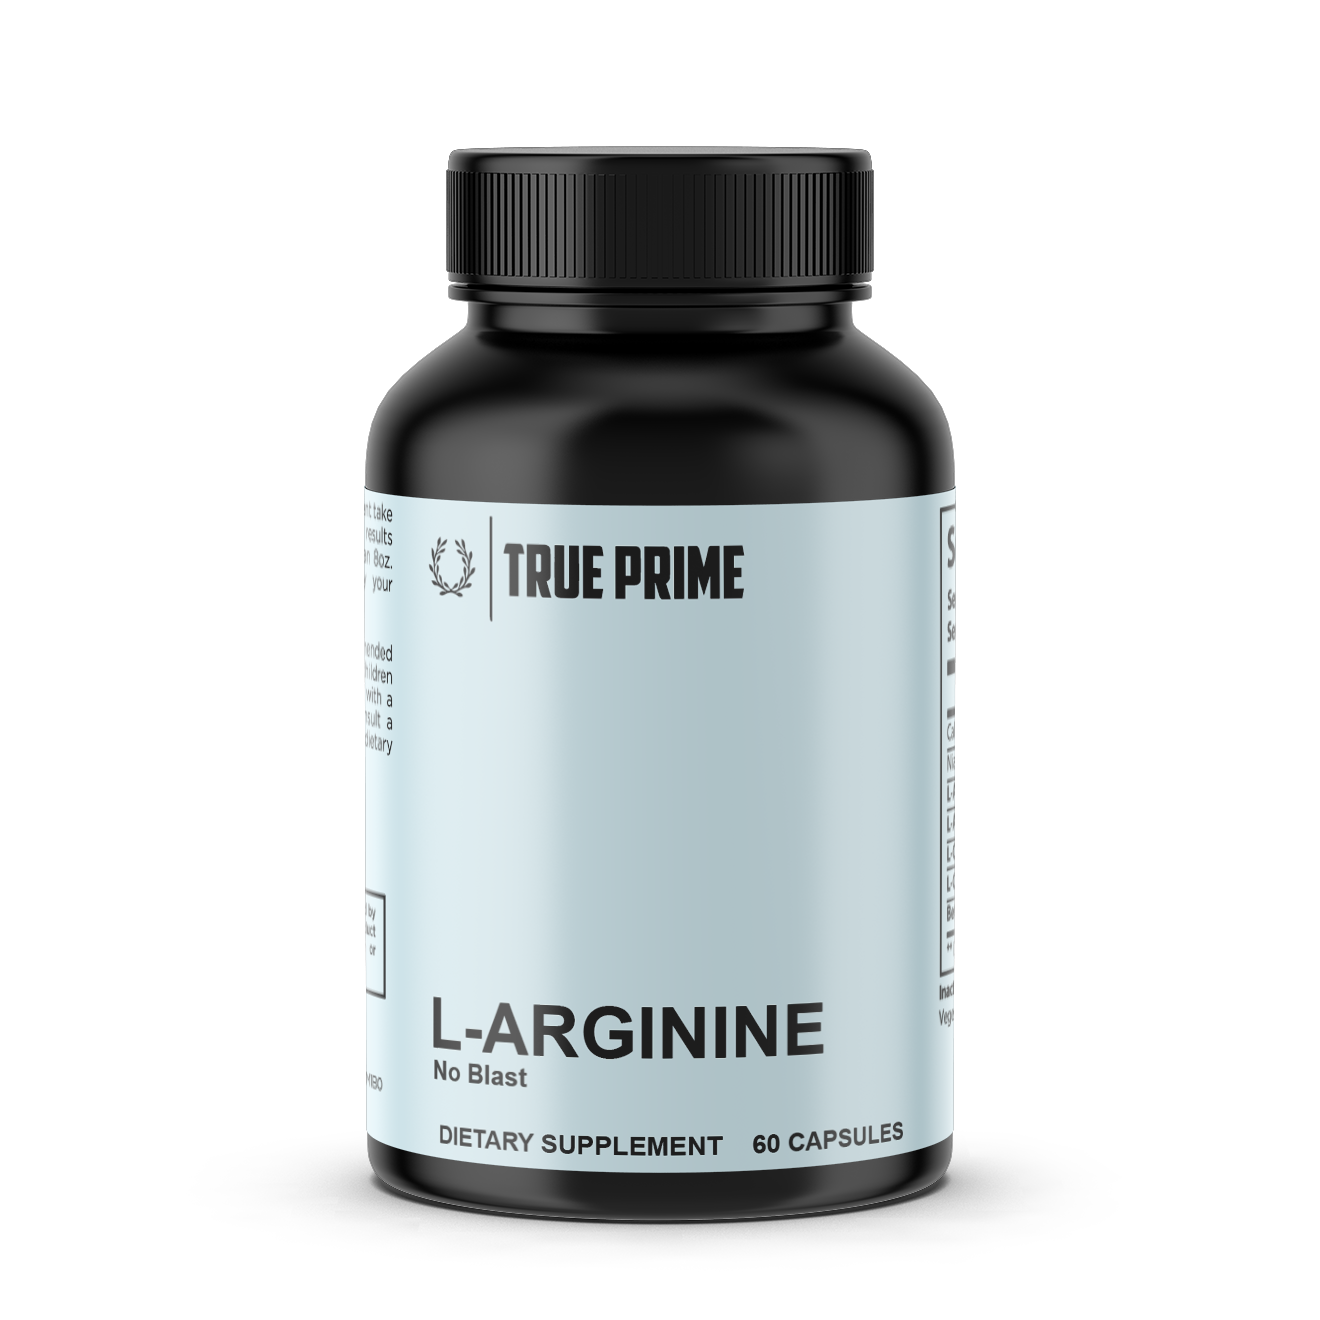 L-Arginine-No Blast - True Prime Nutrition 